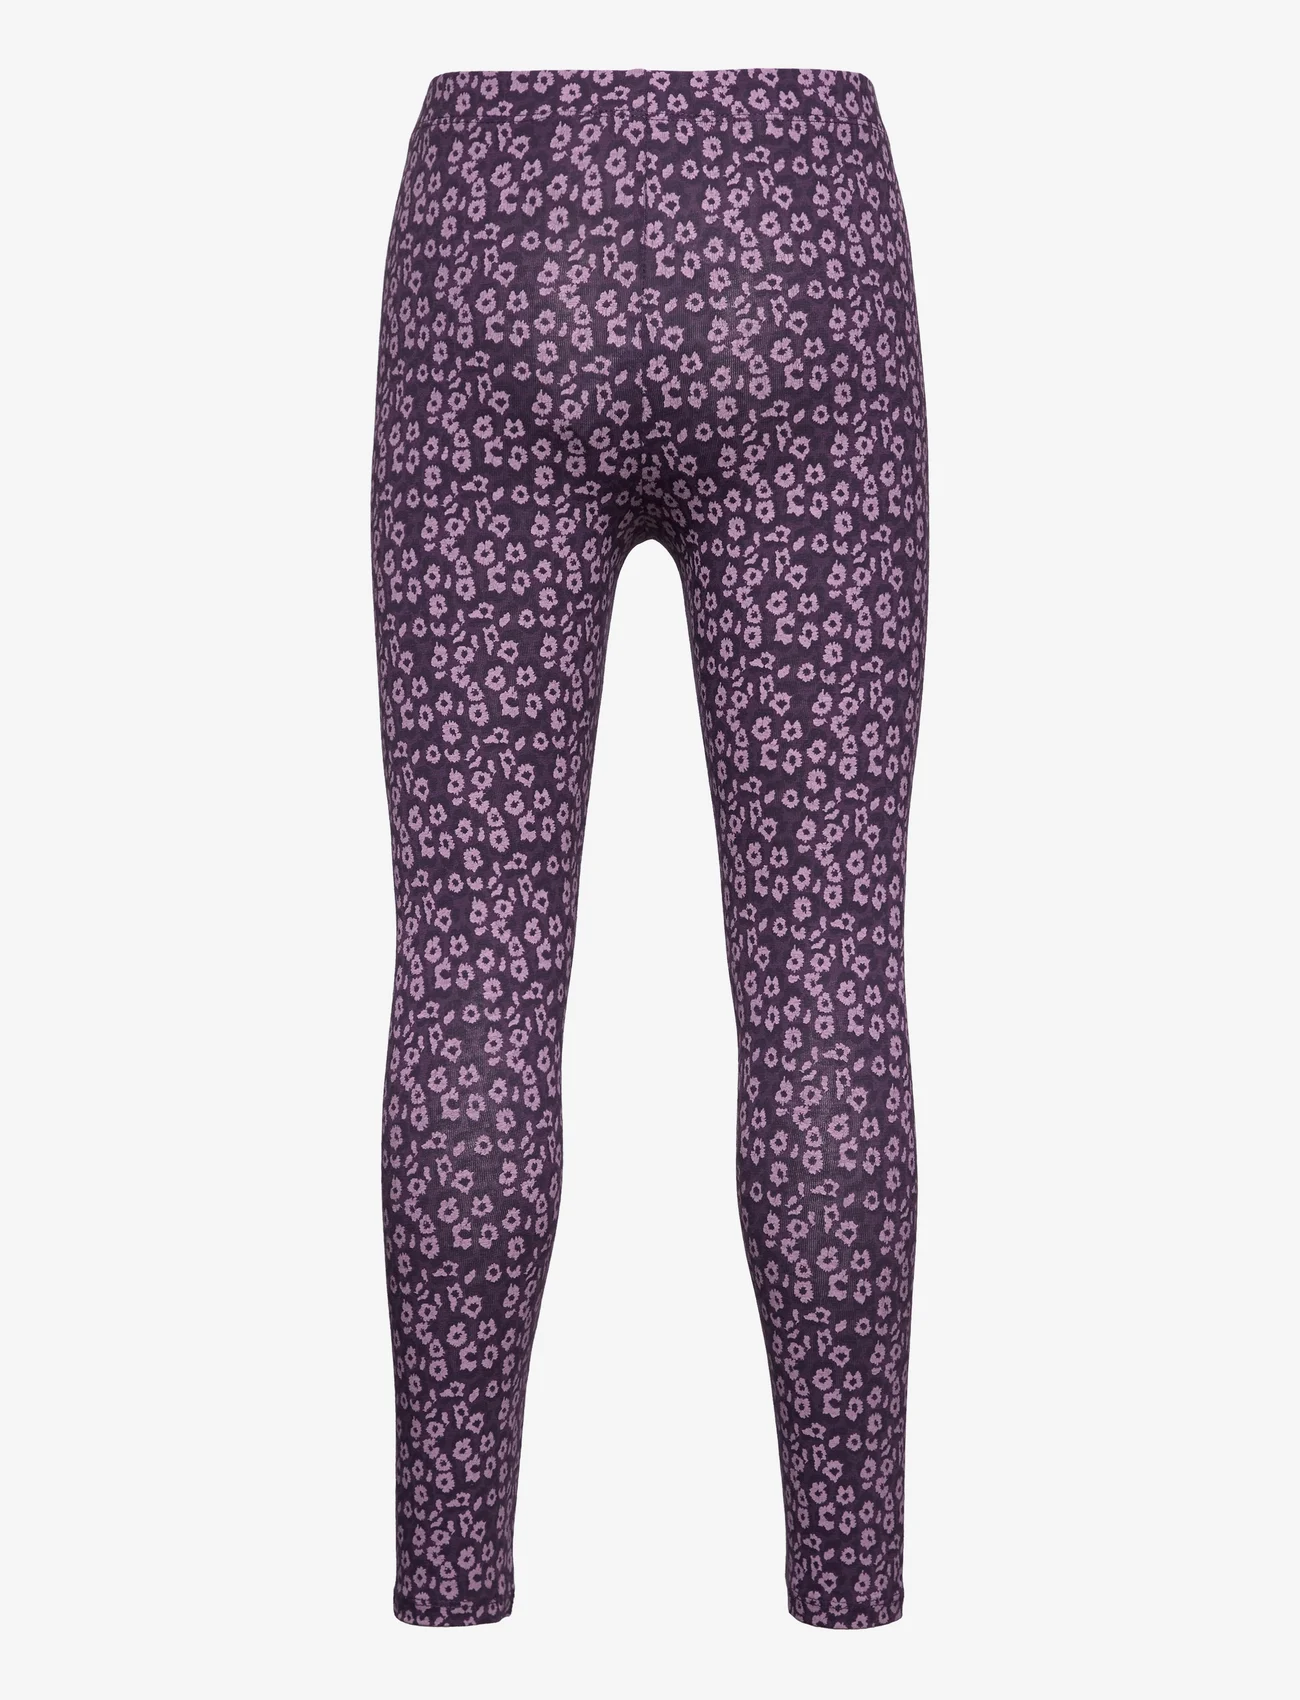 Mango - Floral print leggings - lägsta priserna - medium purple - 1